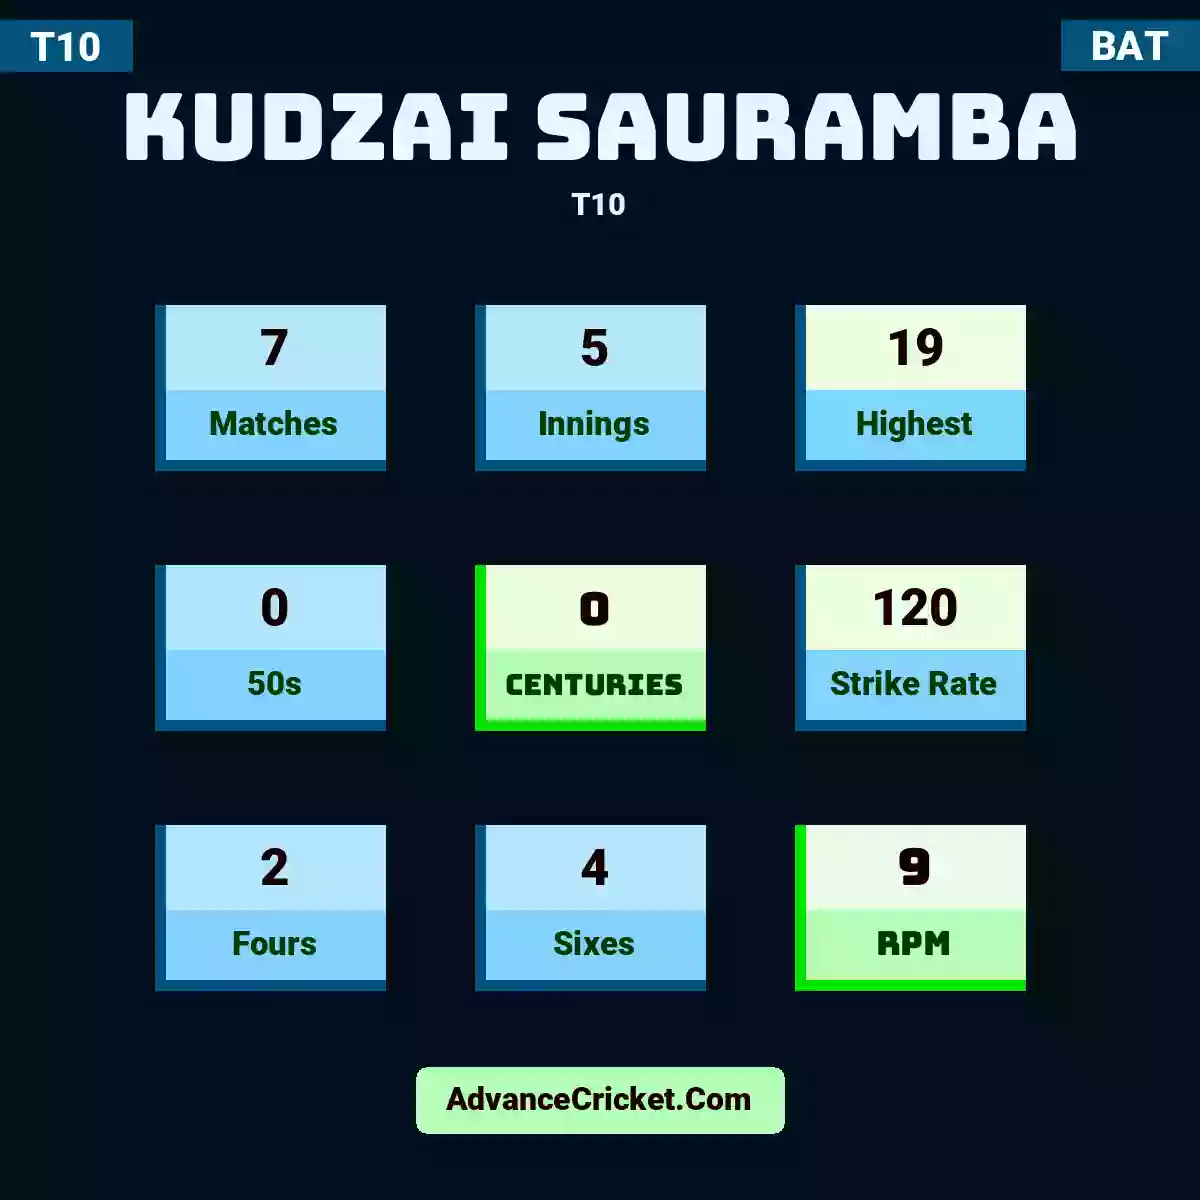 Kudzai Sauramba T10 , Kudzai Sauramba played 7 matches, scored 19 runs as highest, 0 half-centuries, and 0 centuries, with a strike rate of 120. K.Sauramba hit 2 fours and 4 sixes, with an RPM of 9.